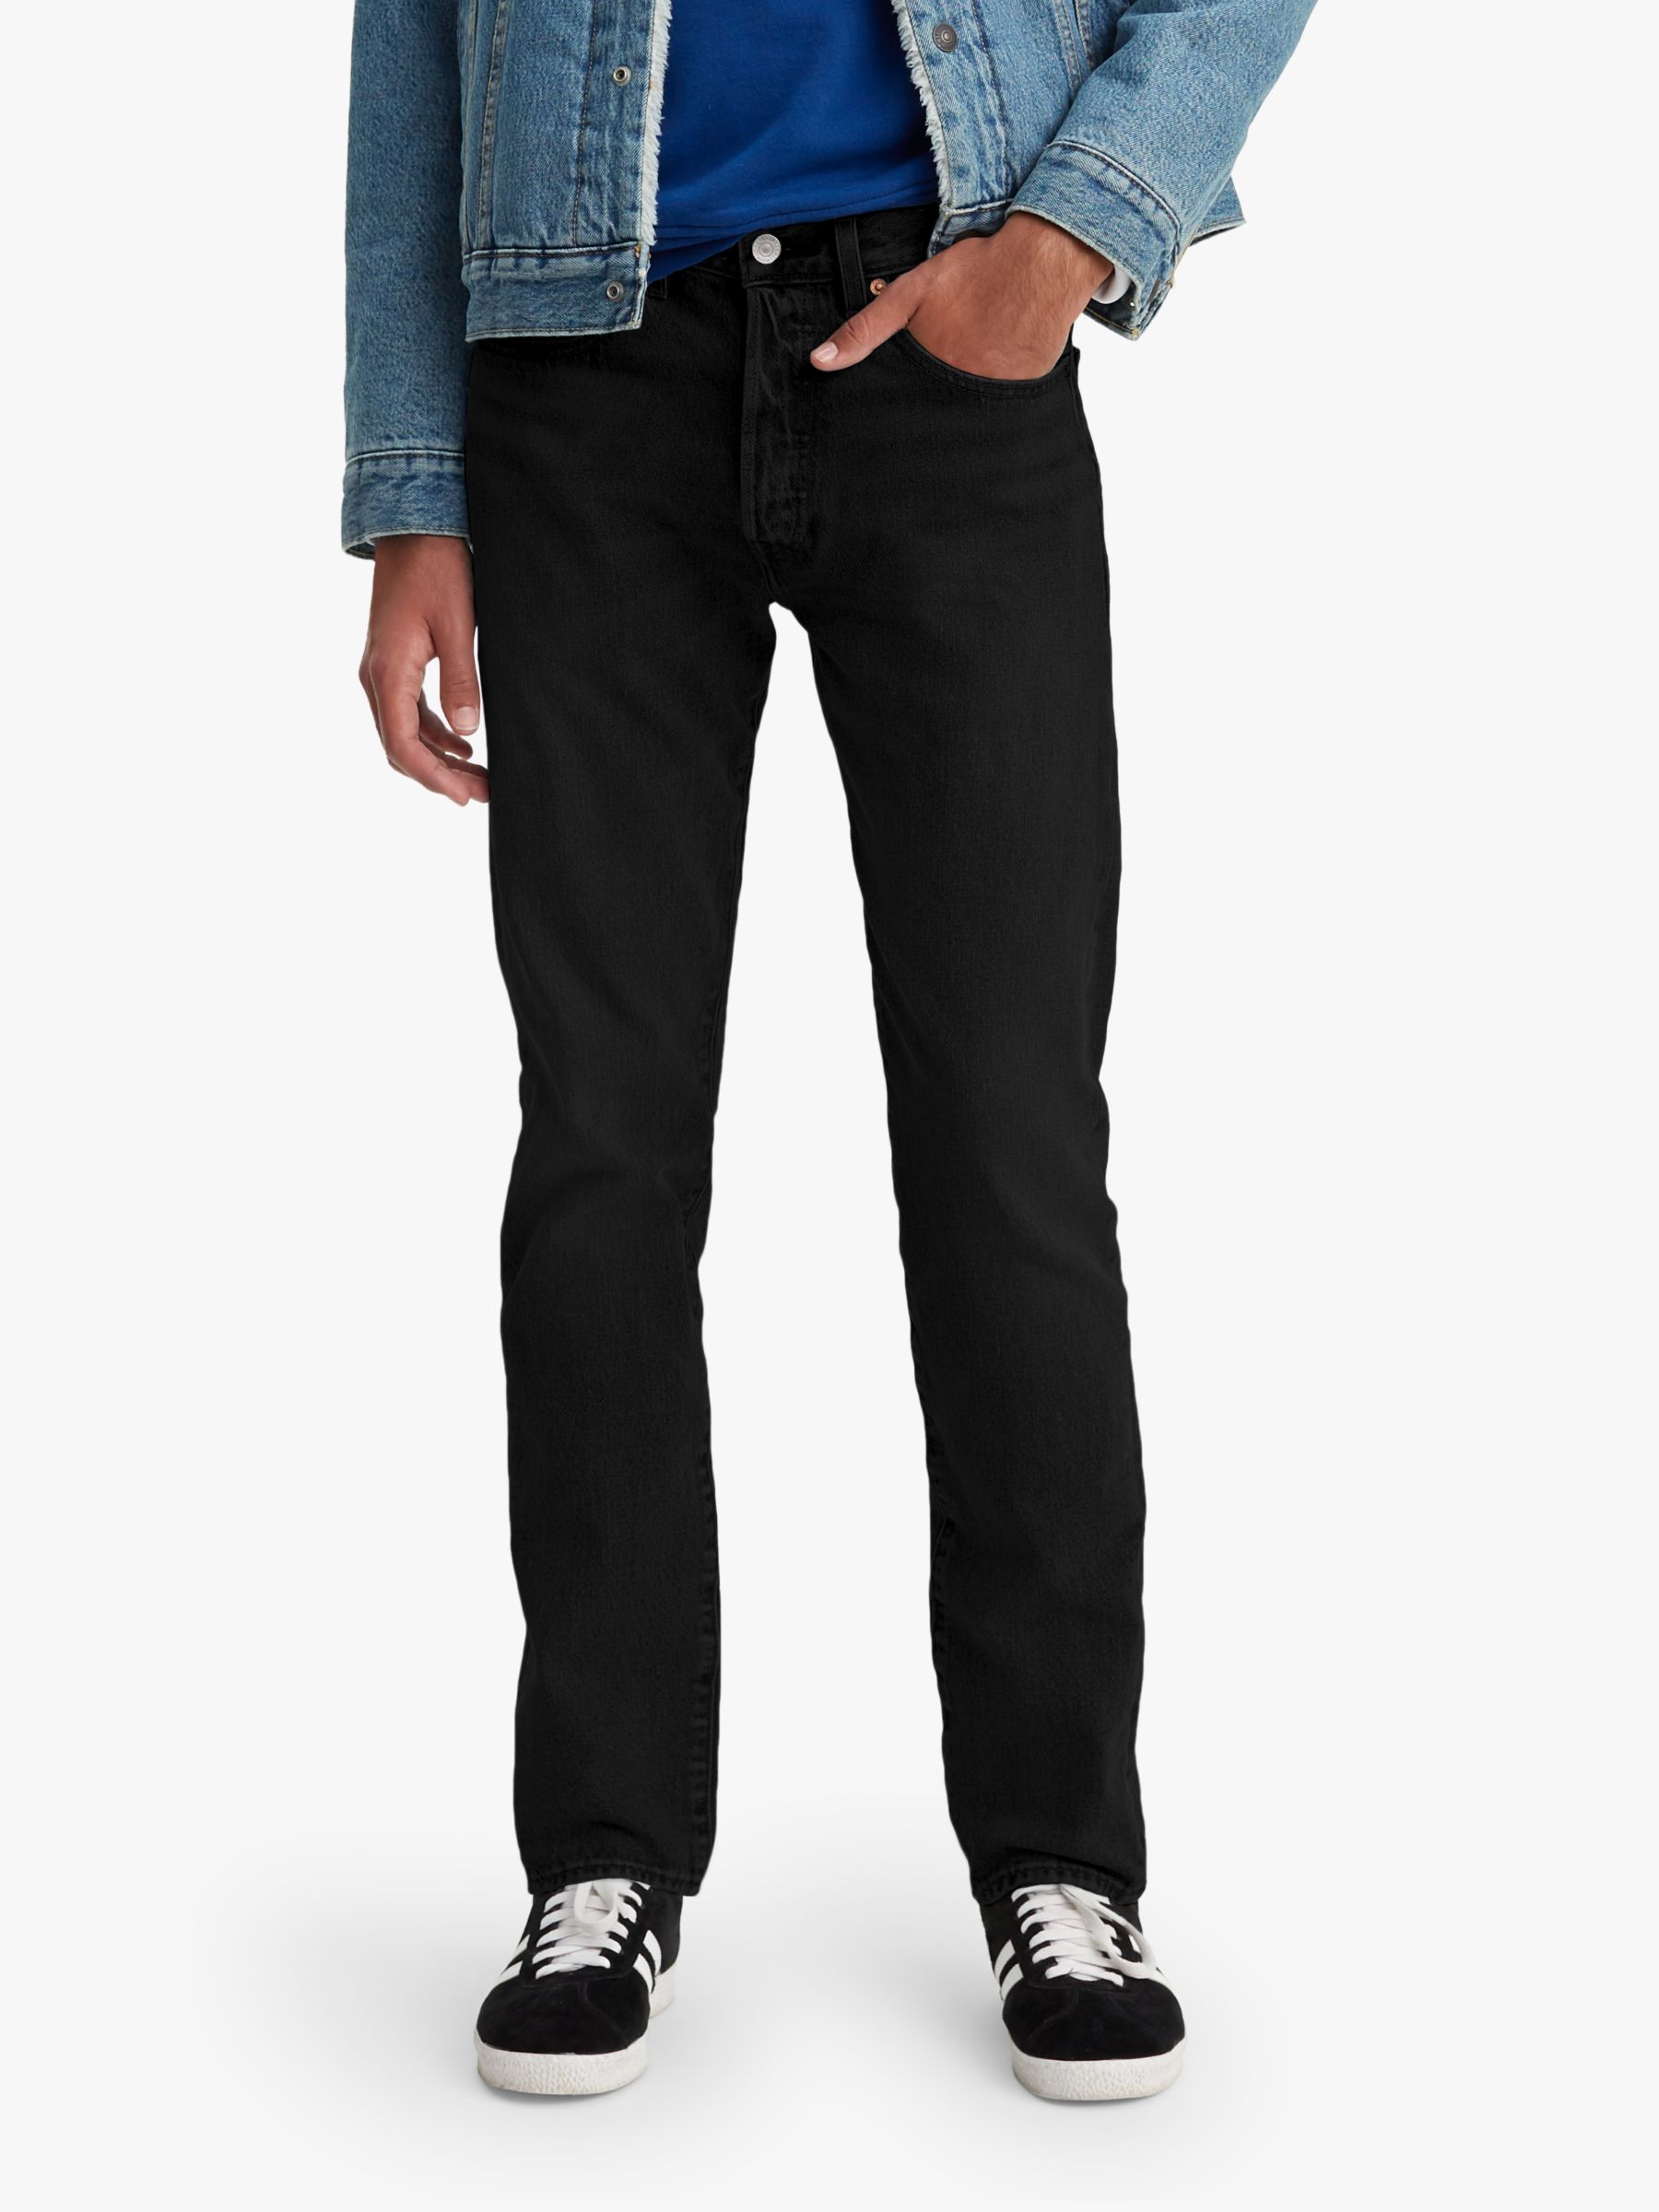 Levi's 501 Slim Tapered Jeans, Black